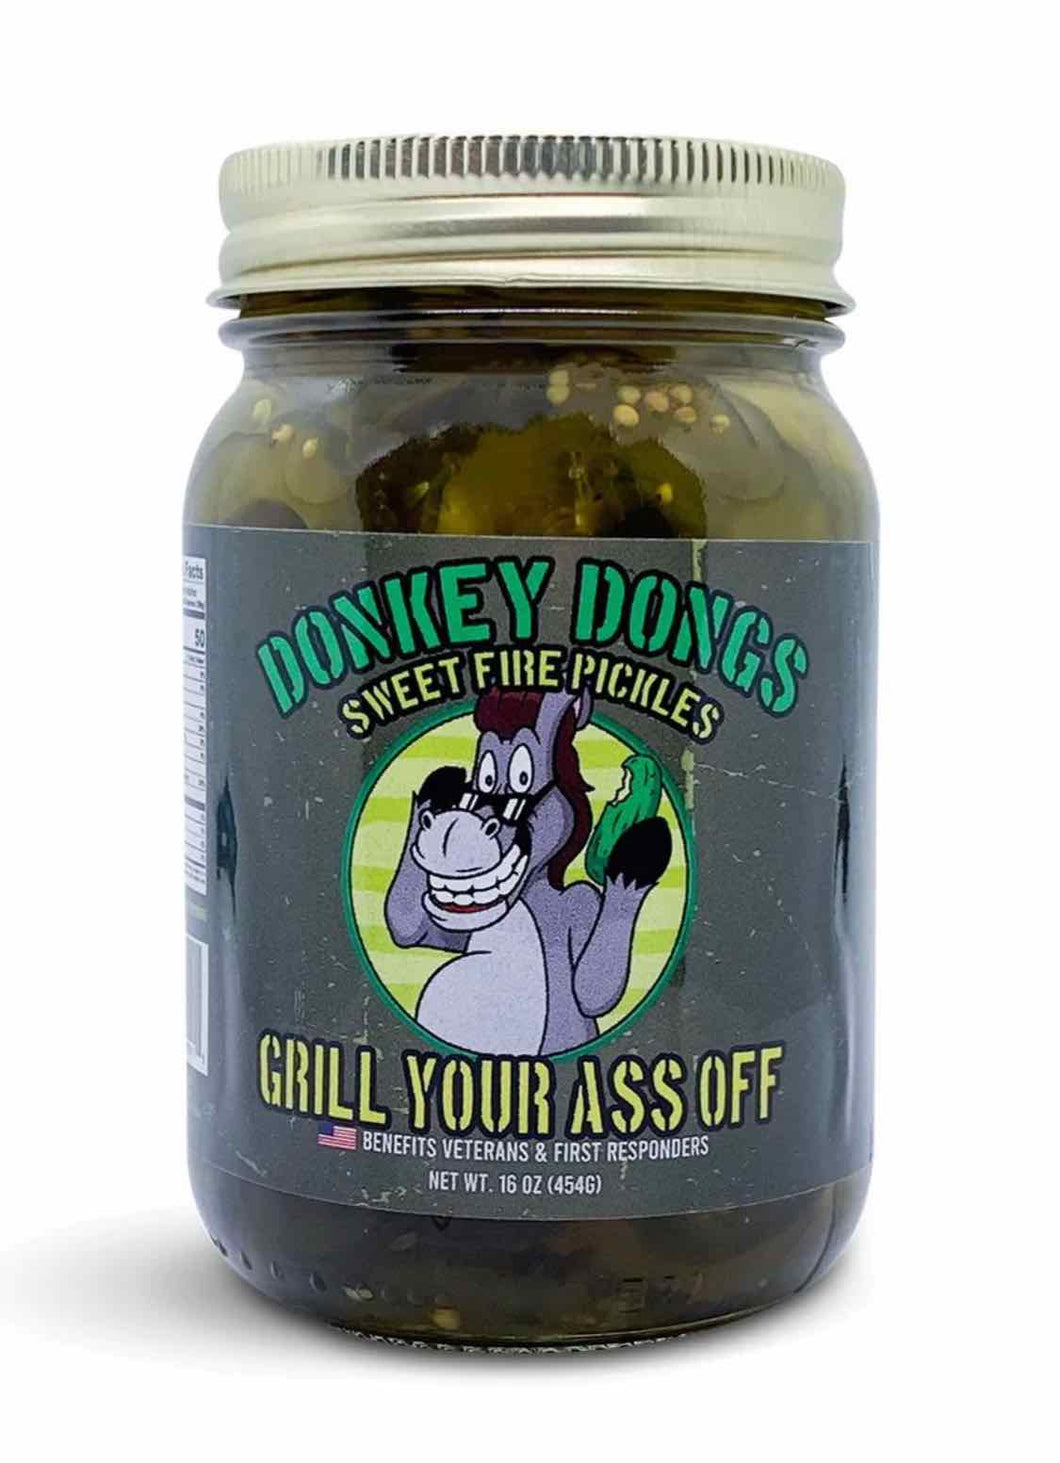 Donkey Dongs